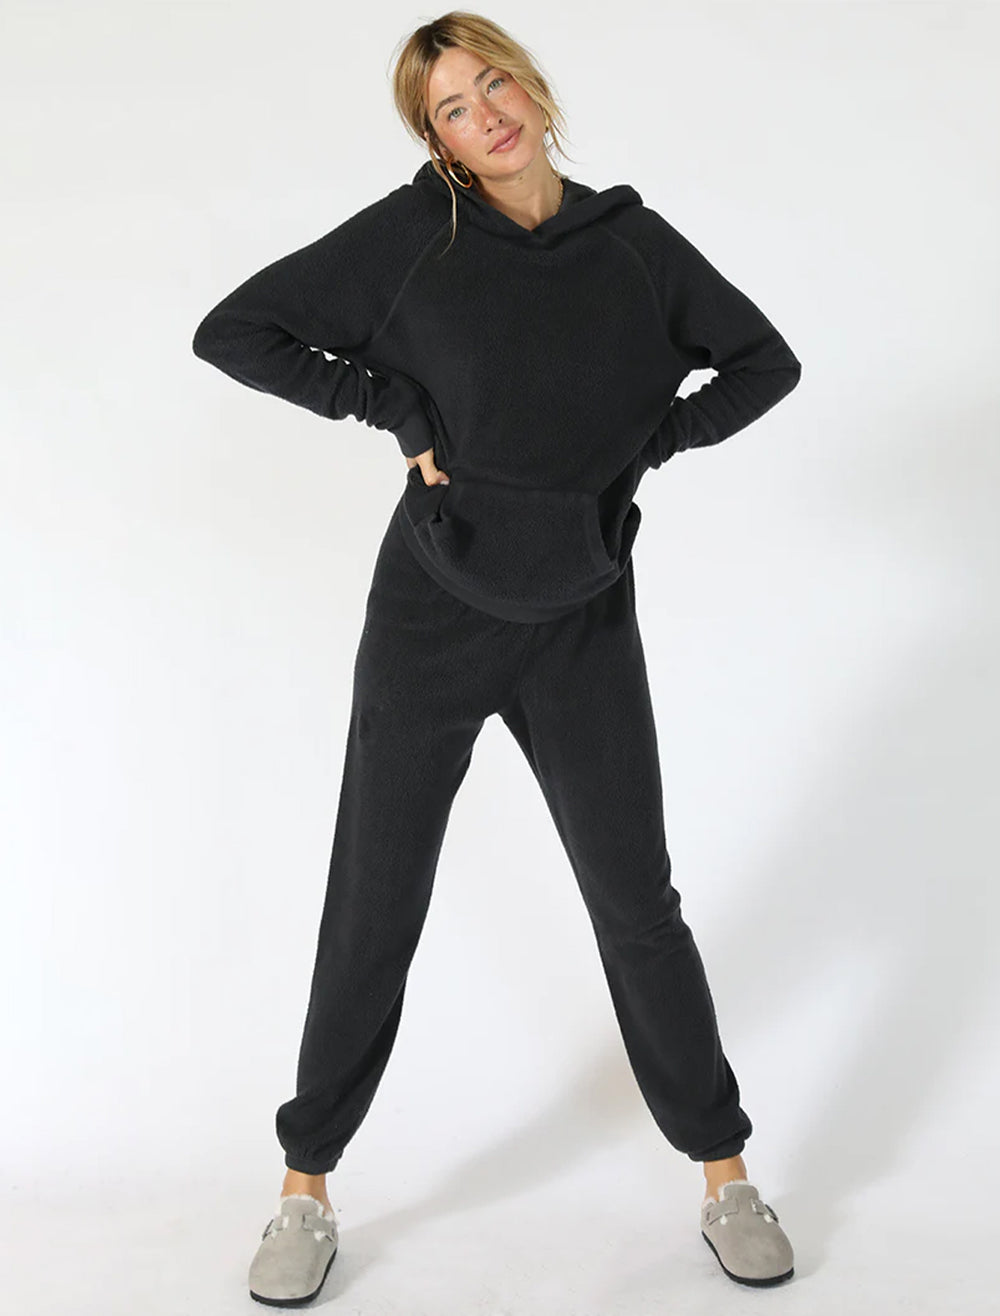 Model wearing Perfectwhitetee's fleetwood jogger in vintage black.